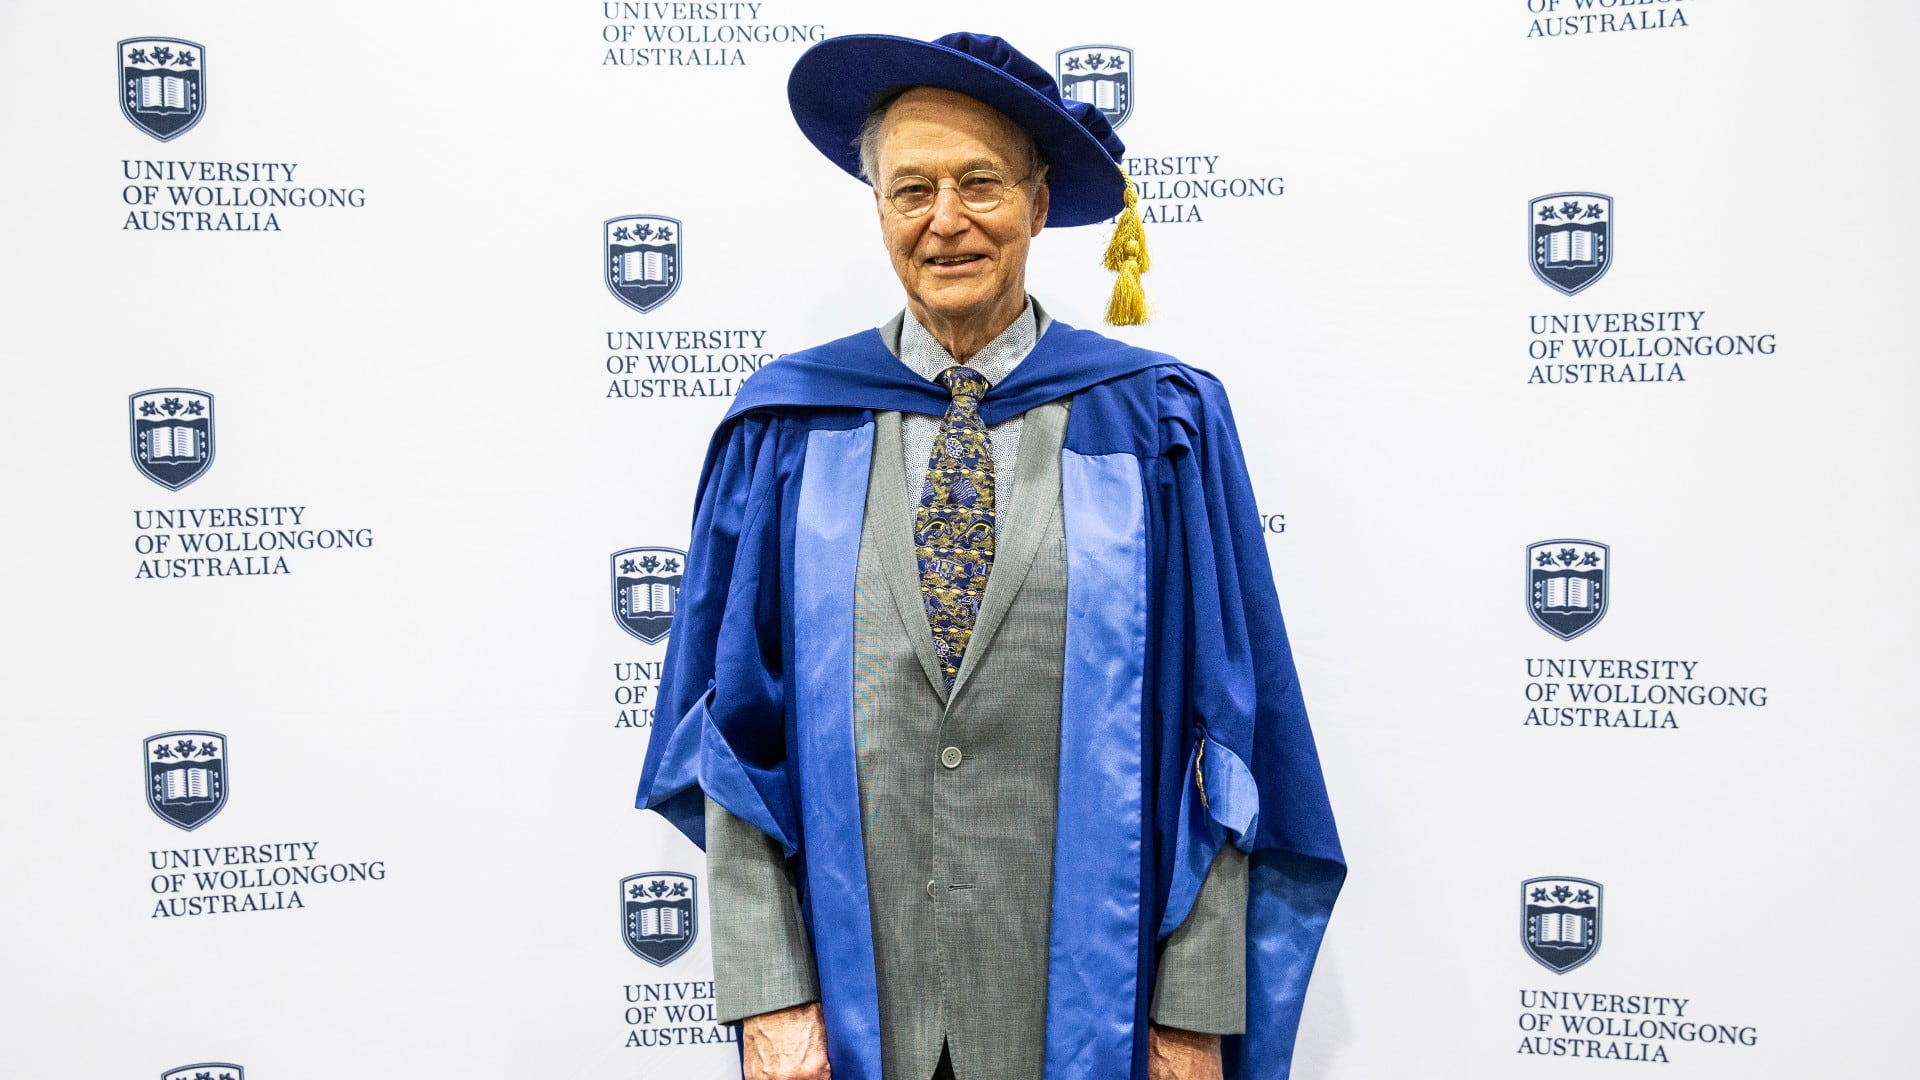 Emeritus Professor Richard Kenchington, pictured wearing his graduation gown and cap. Photo: Paul Jones